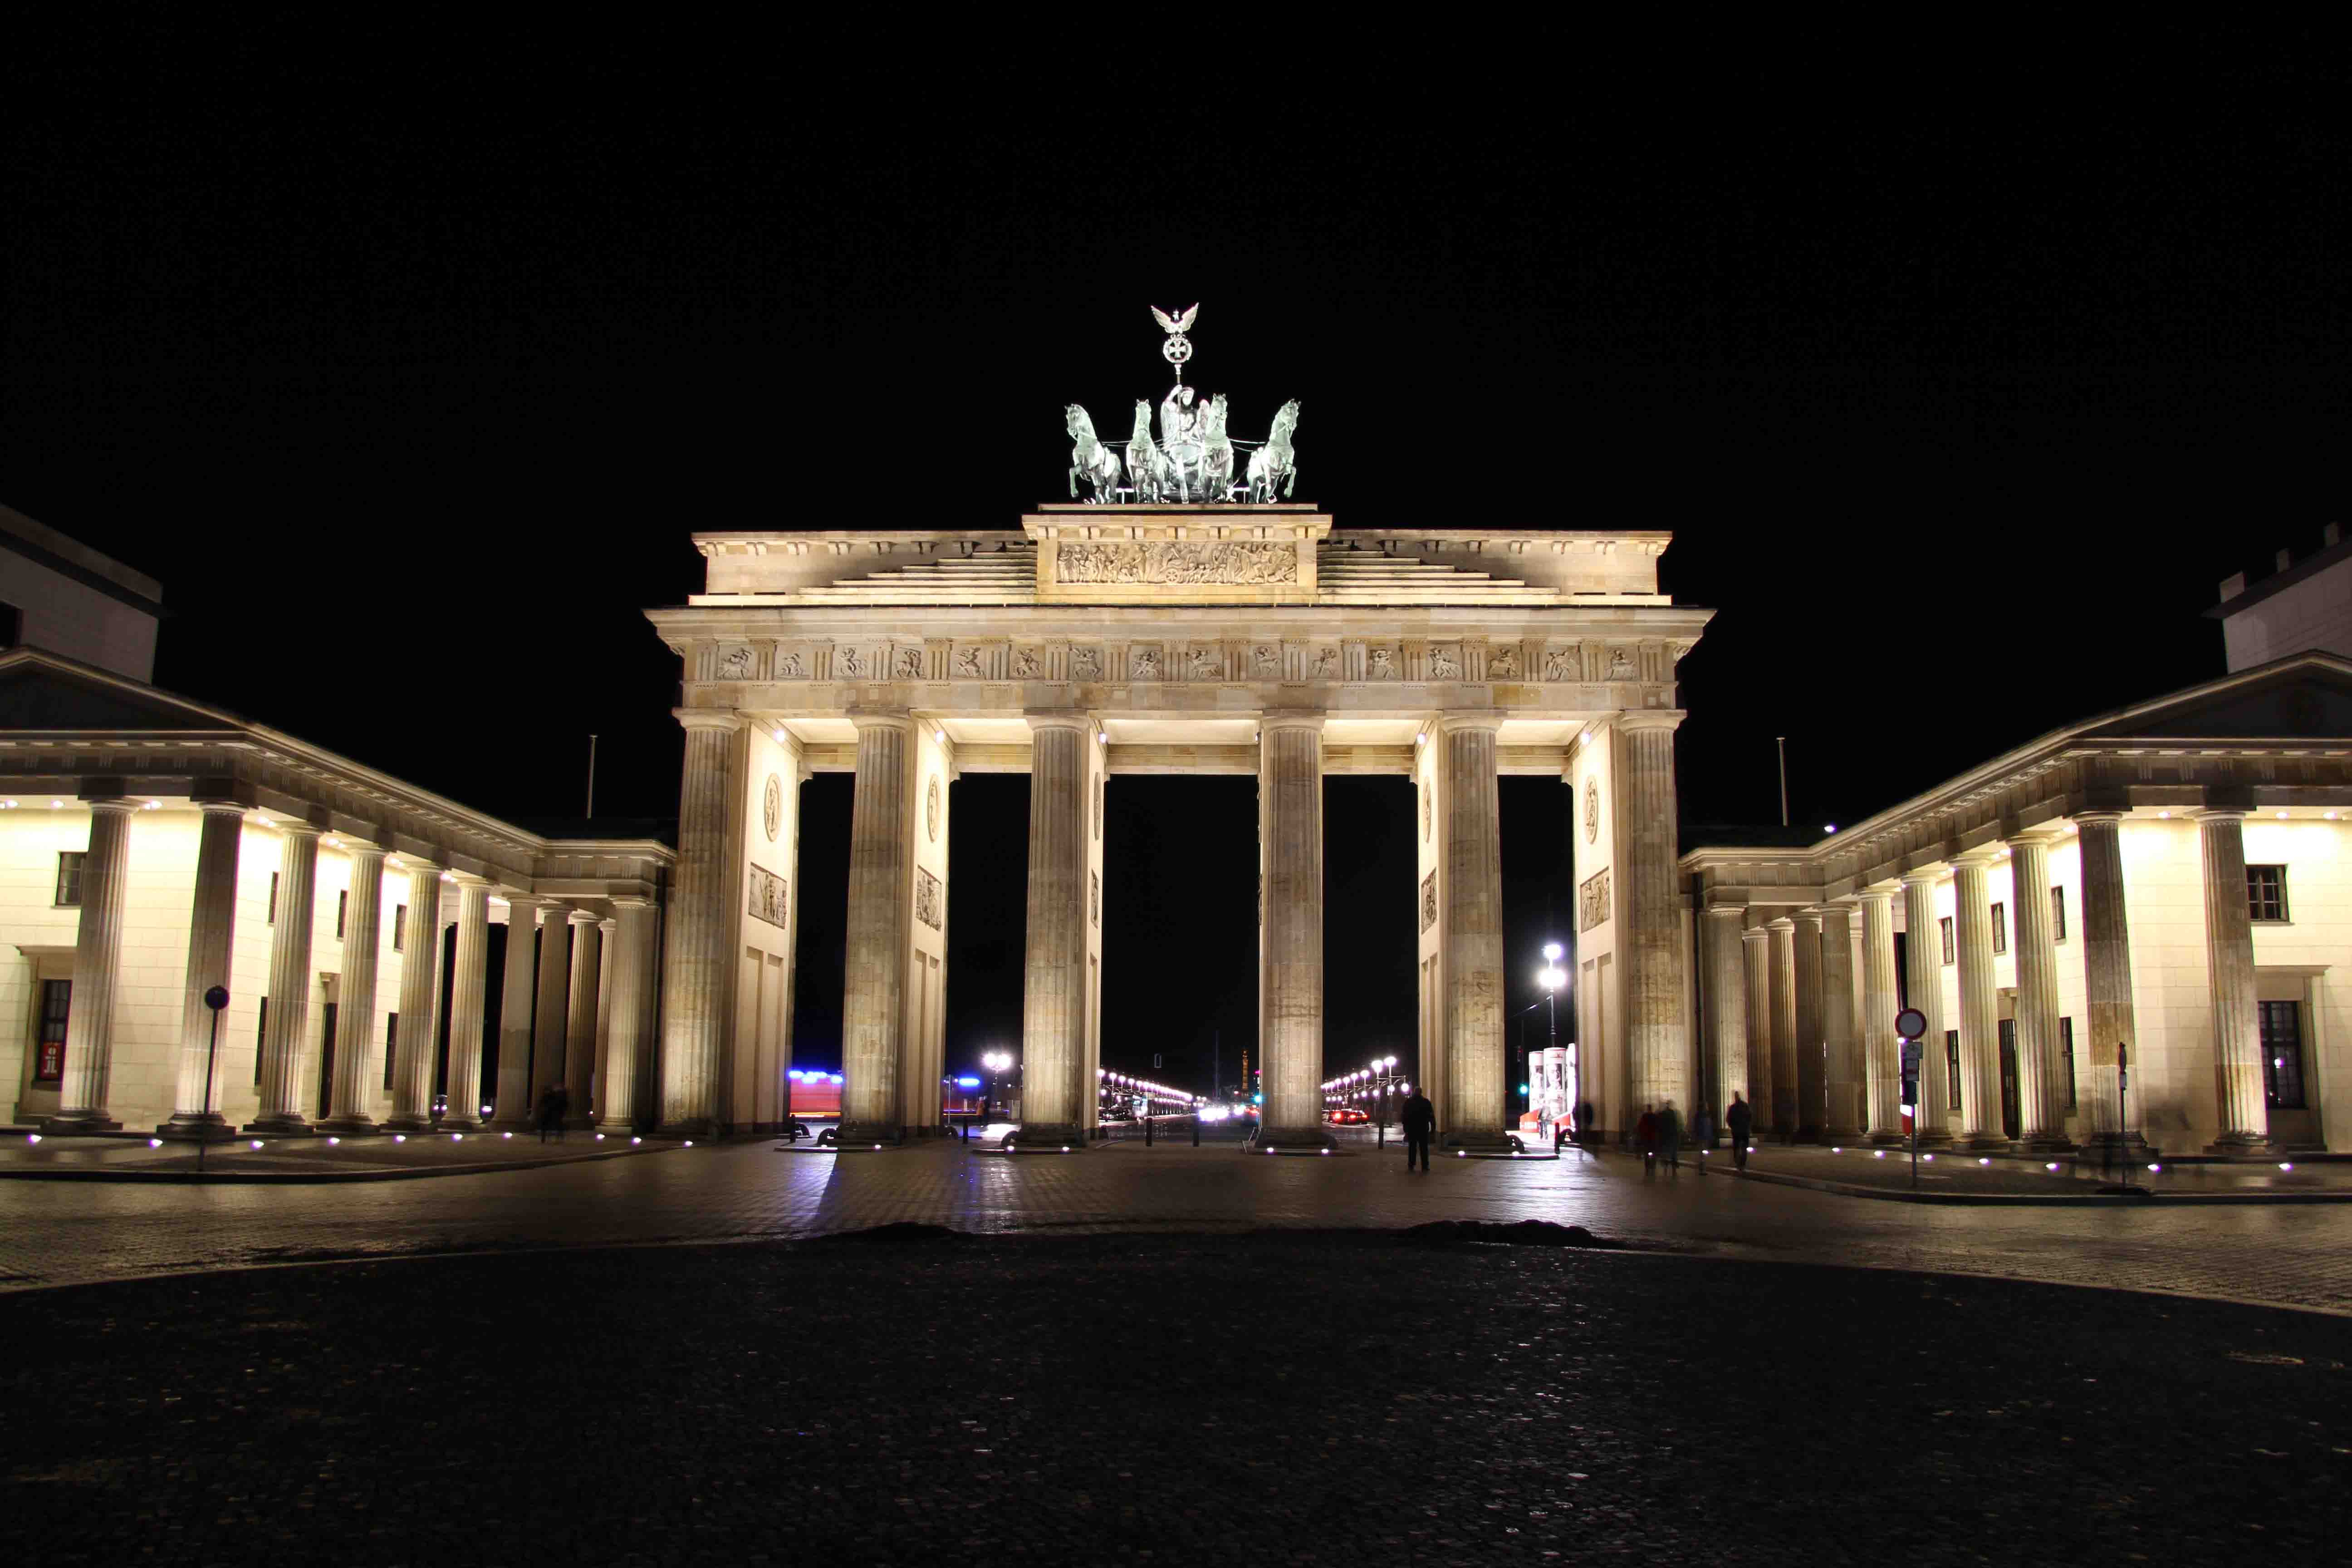 Amazing Brandenburg Gate Pictures & Backgrounds